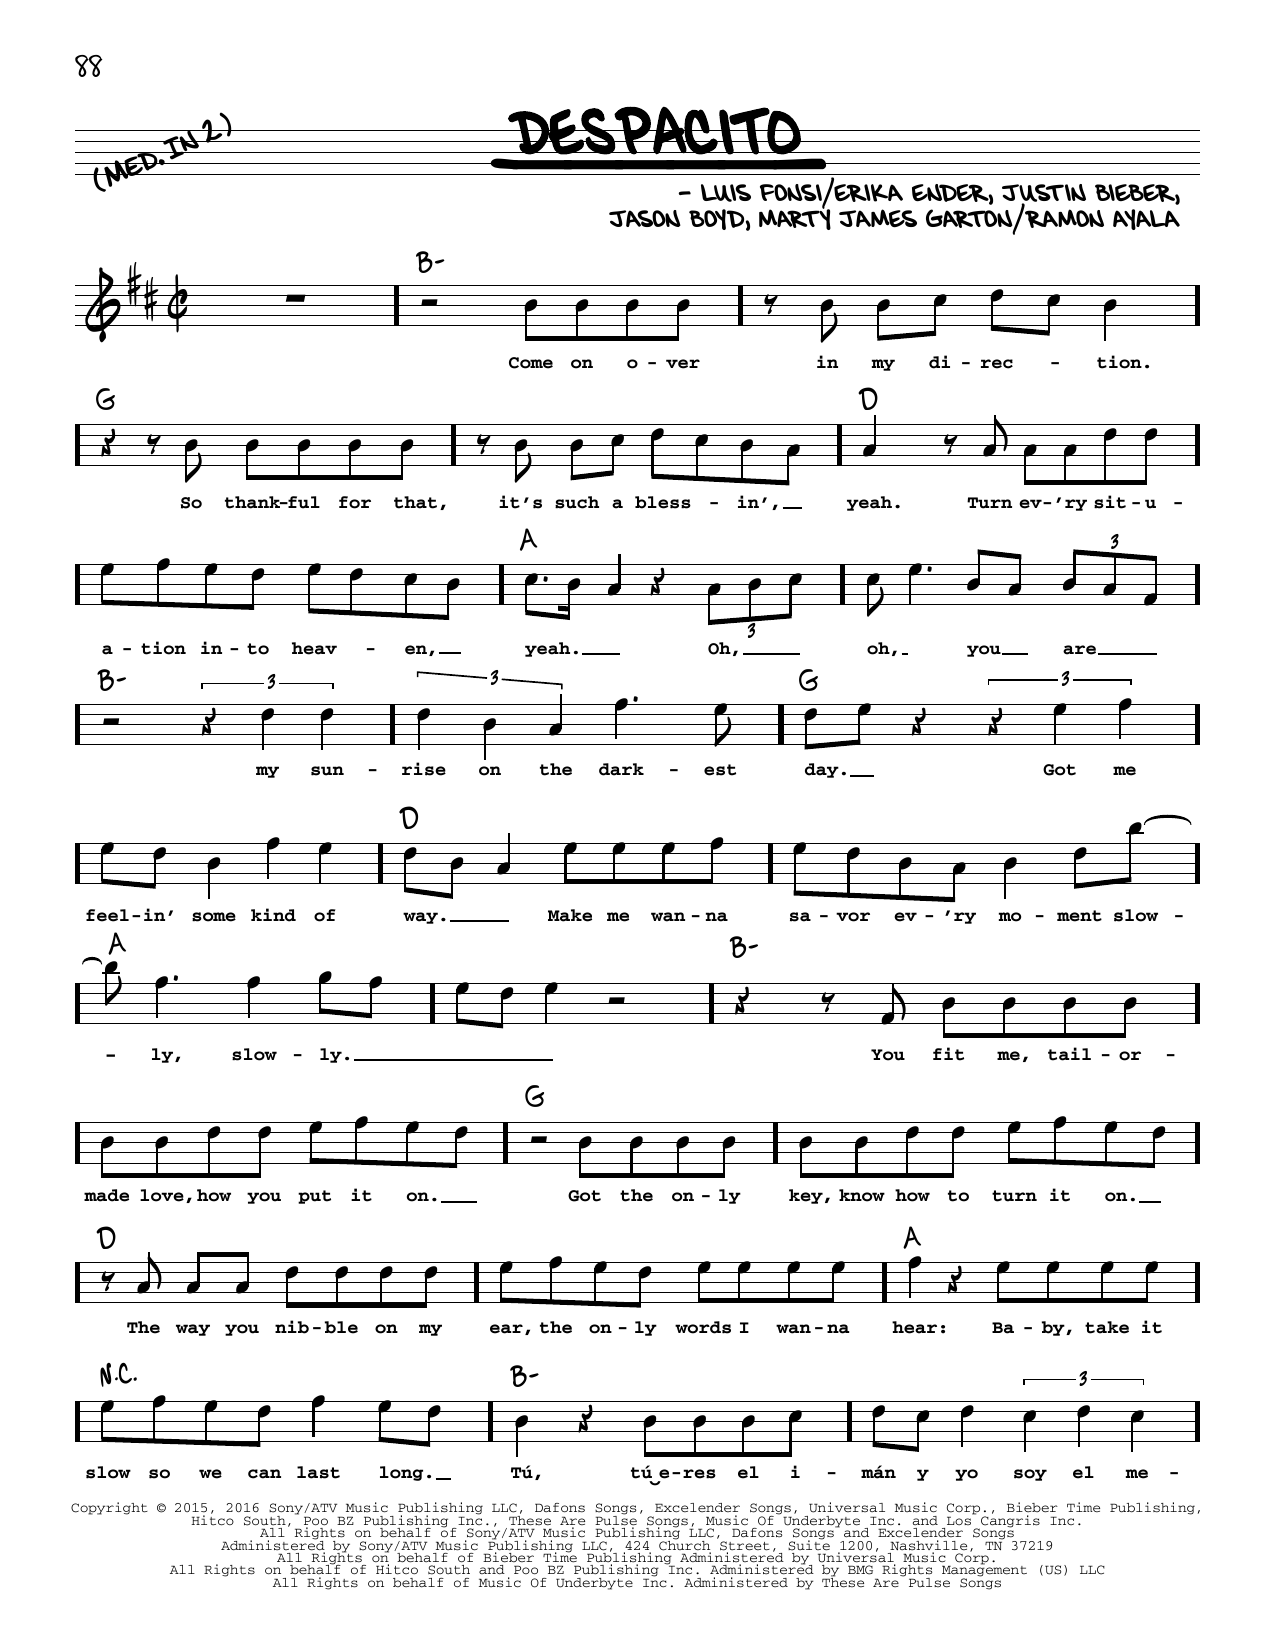 Luis Fonsi & Daddy Yankee Despacito (feat. Justin Bieber) Sheet Music Notes & Chords for Trombone Duet - Download or Print PDF